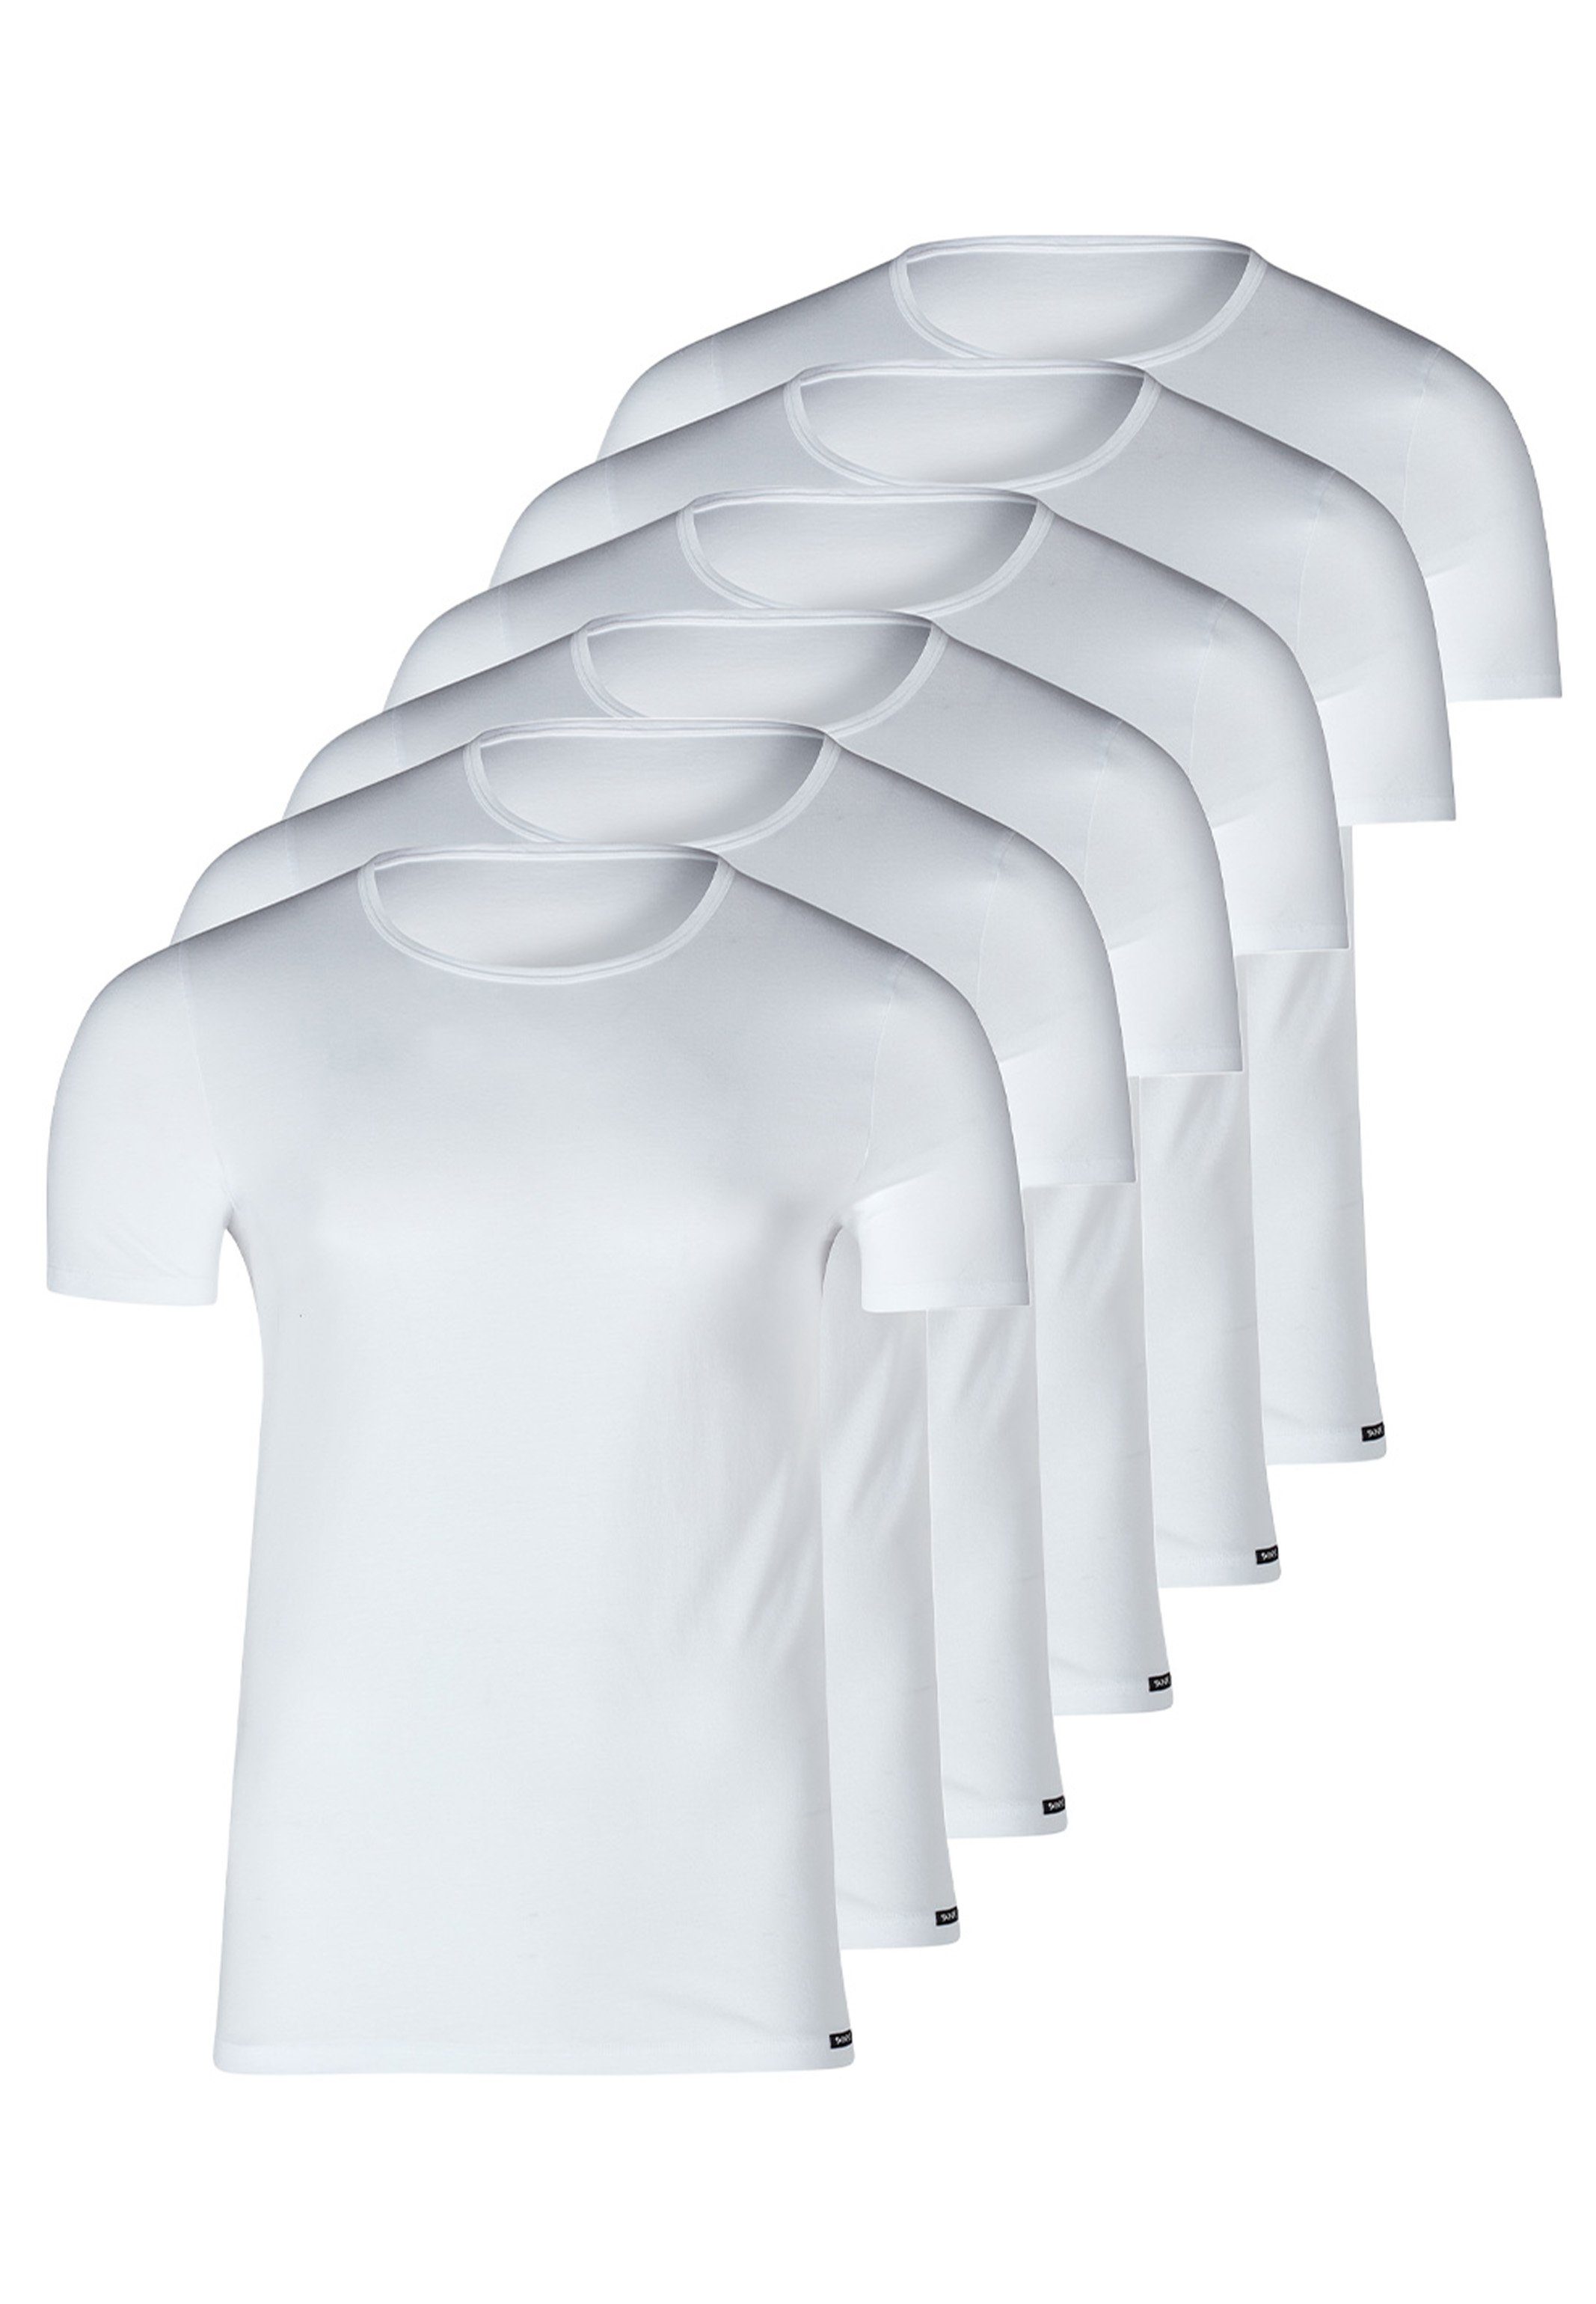 Shirt T-Shirt (Spar-Set, mit / Skiny Unterhemd - Unterhemd / Unterhemd Baumwolle Shirt 6er Rundhalsausschnitt 6-St) Pack Kurzarm - Weiß Kurzarm